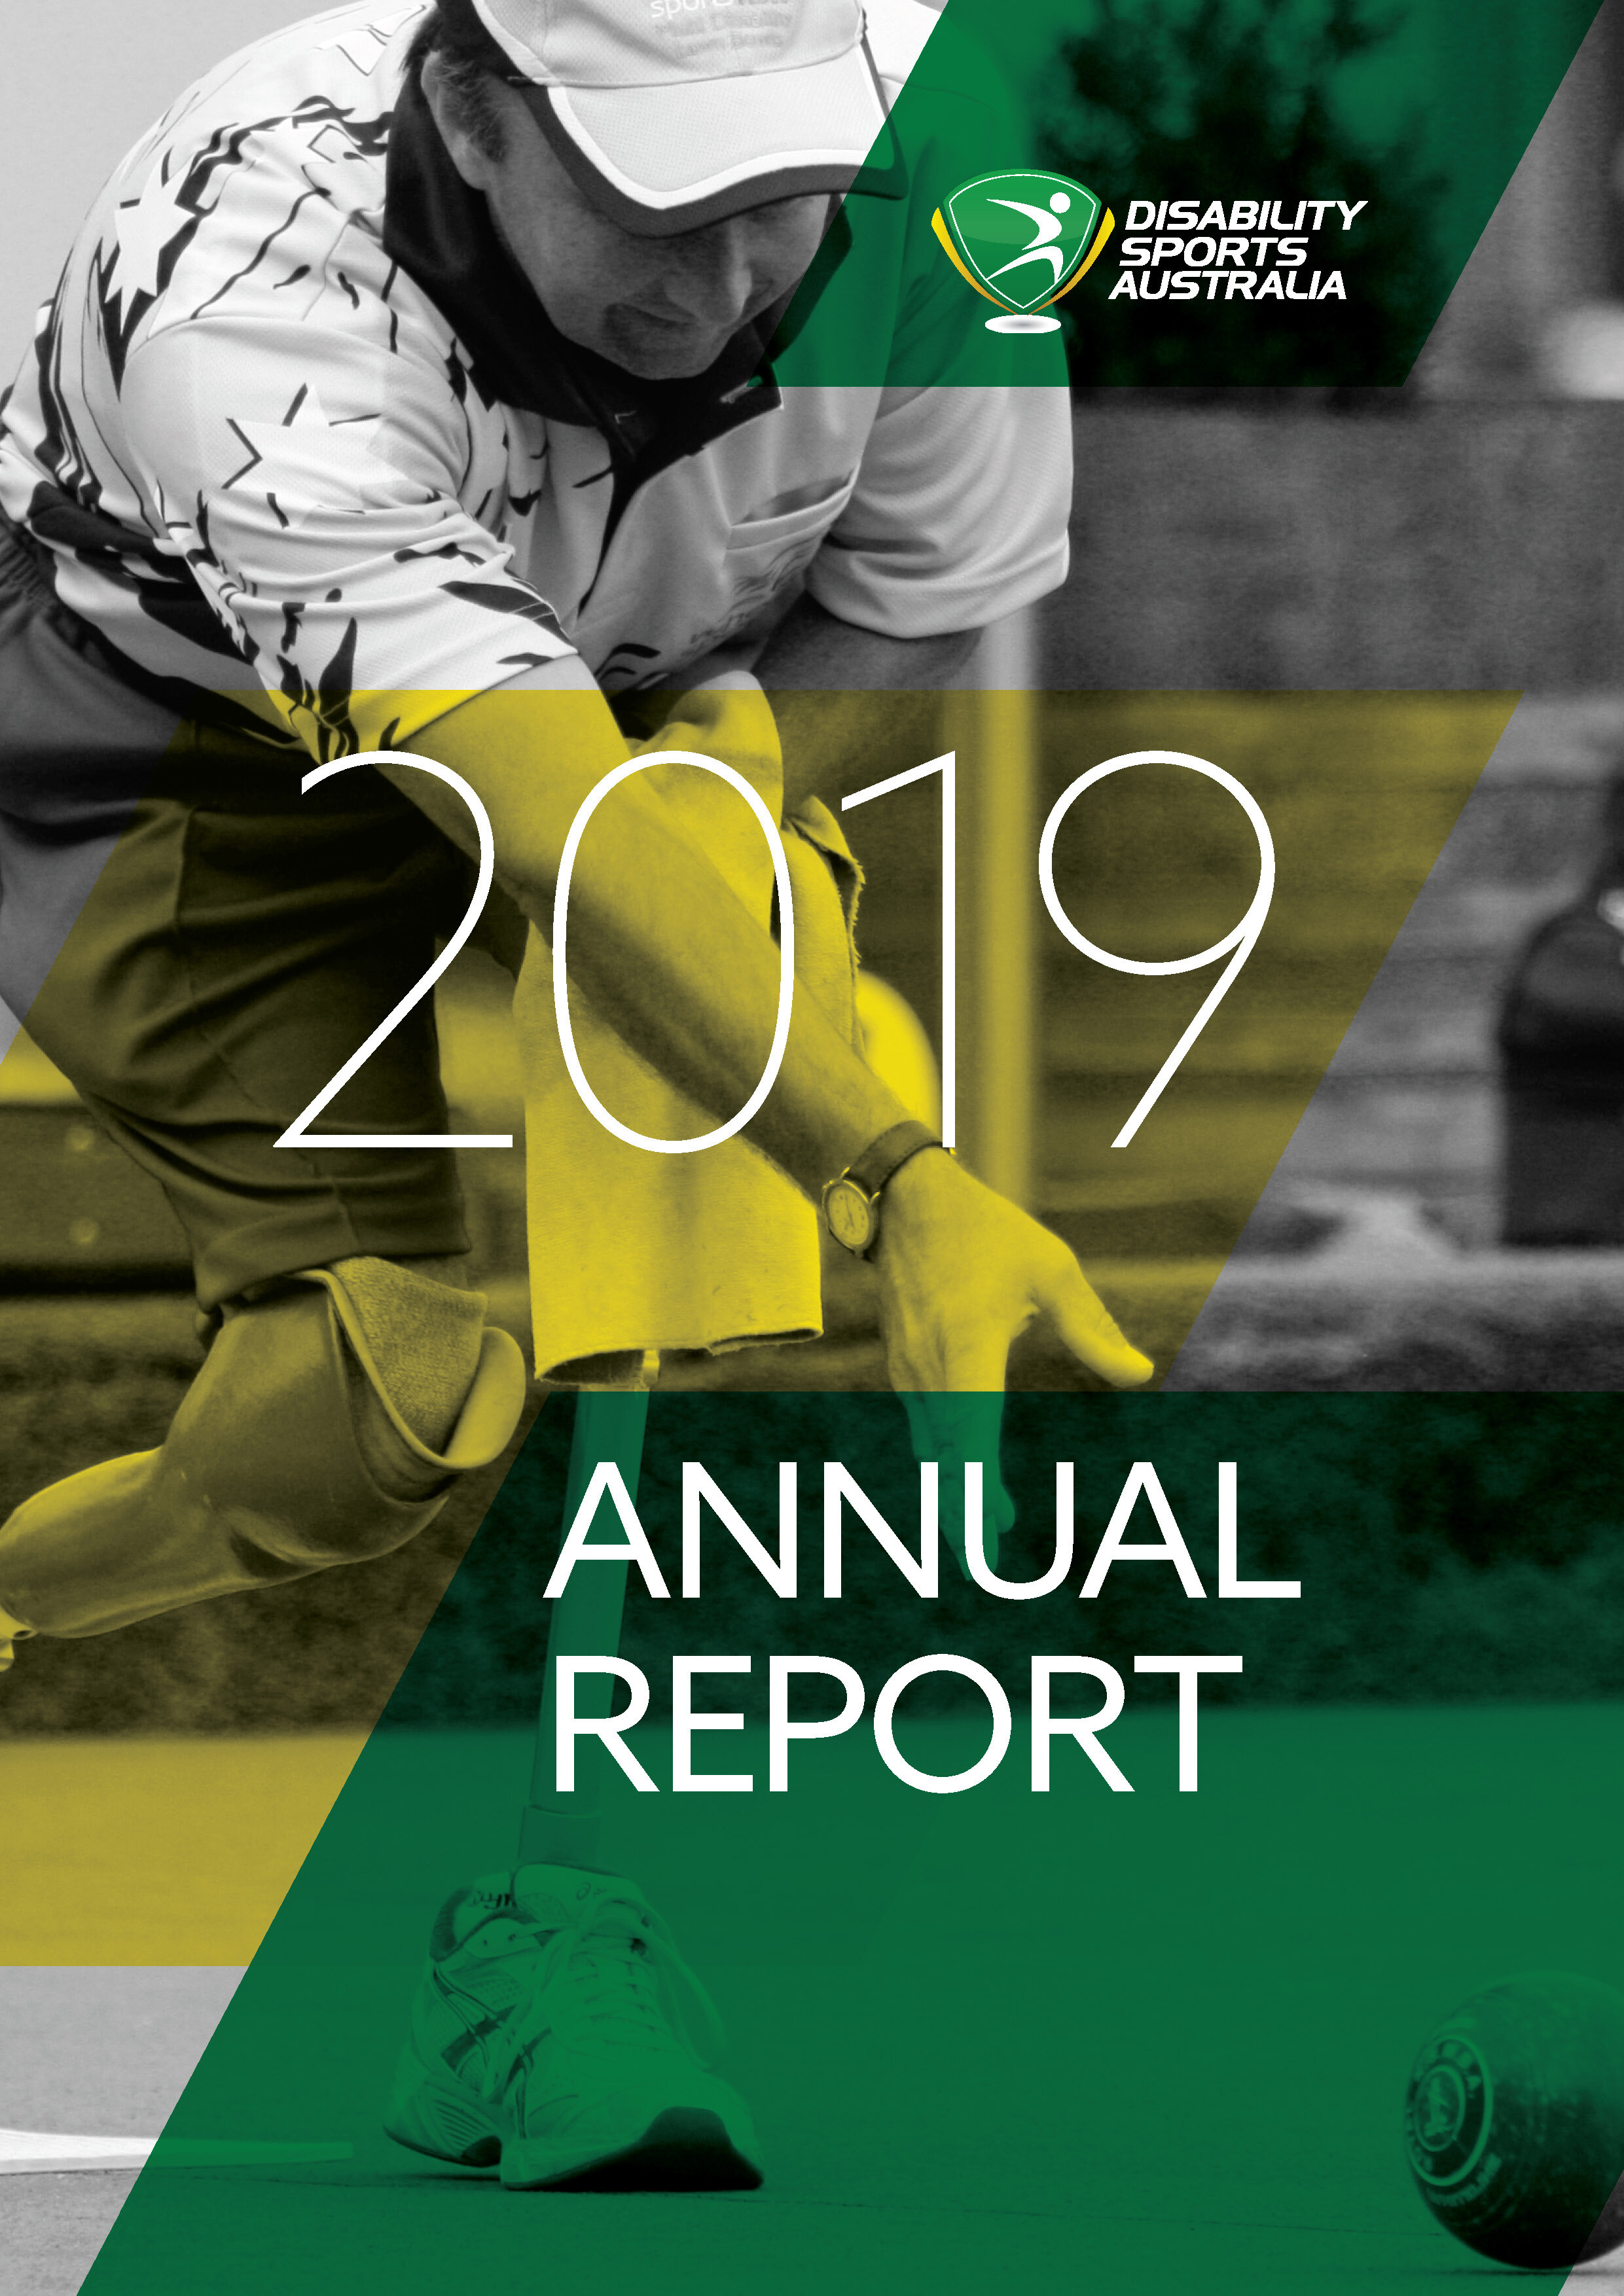 2018/2019 Annual Report